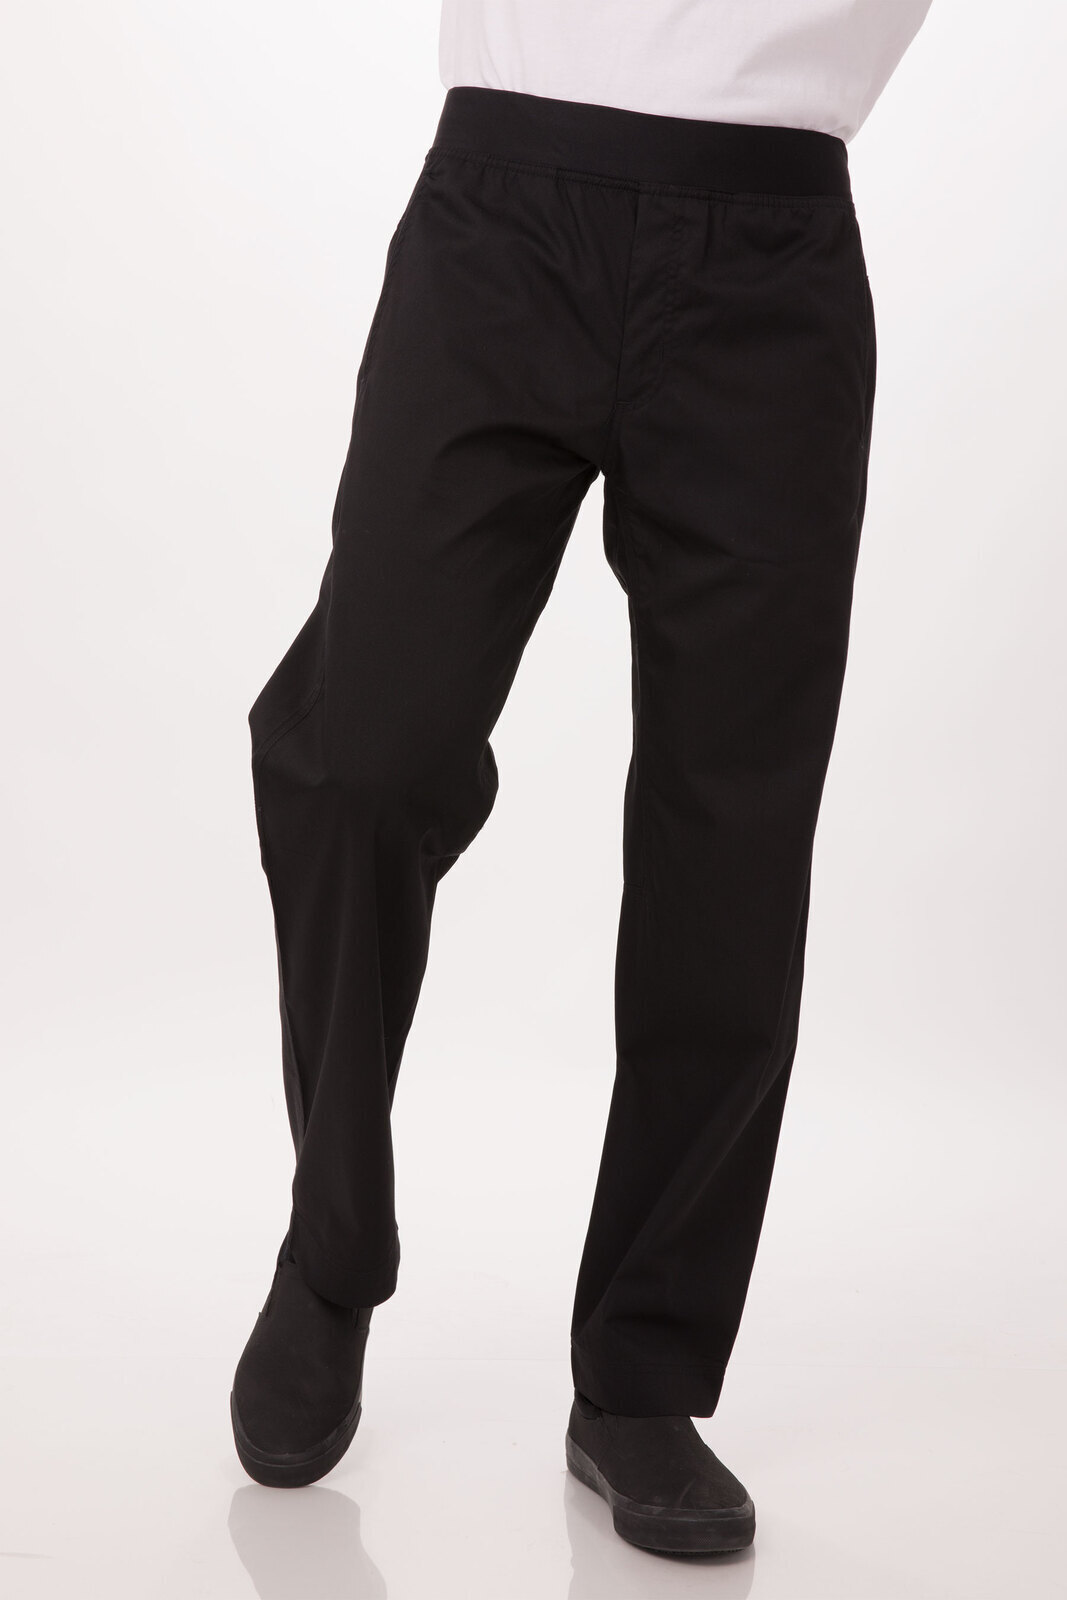 Chef Works Lightweight Black Slim Fit Chef Pants - PBN01-BLK